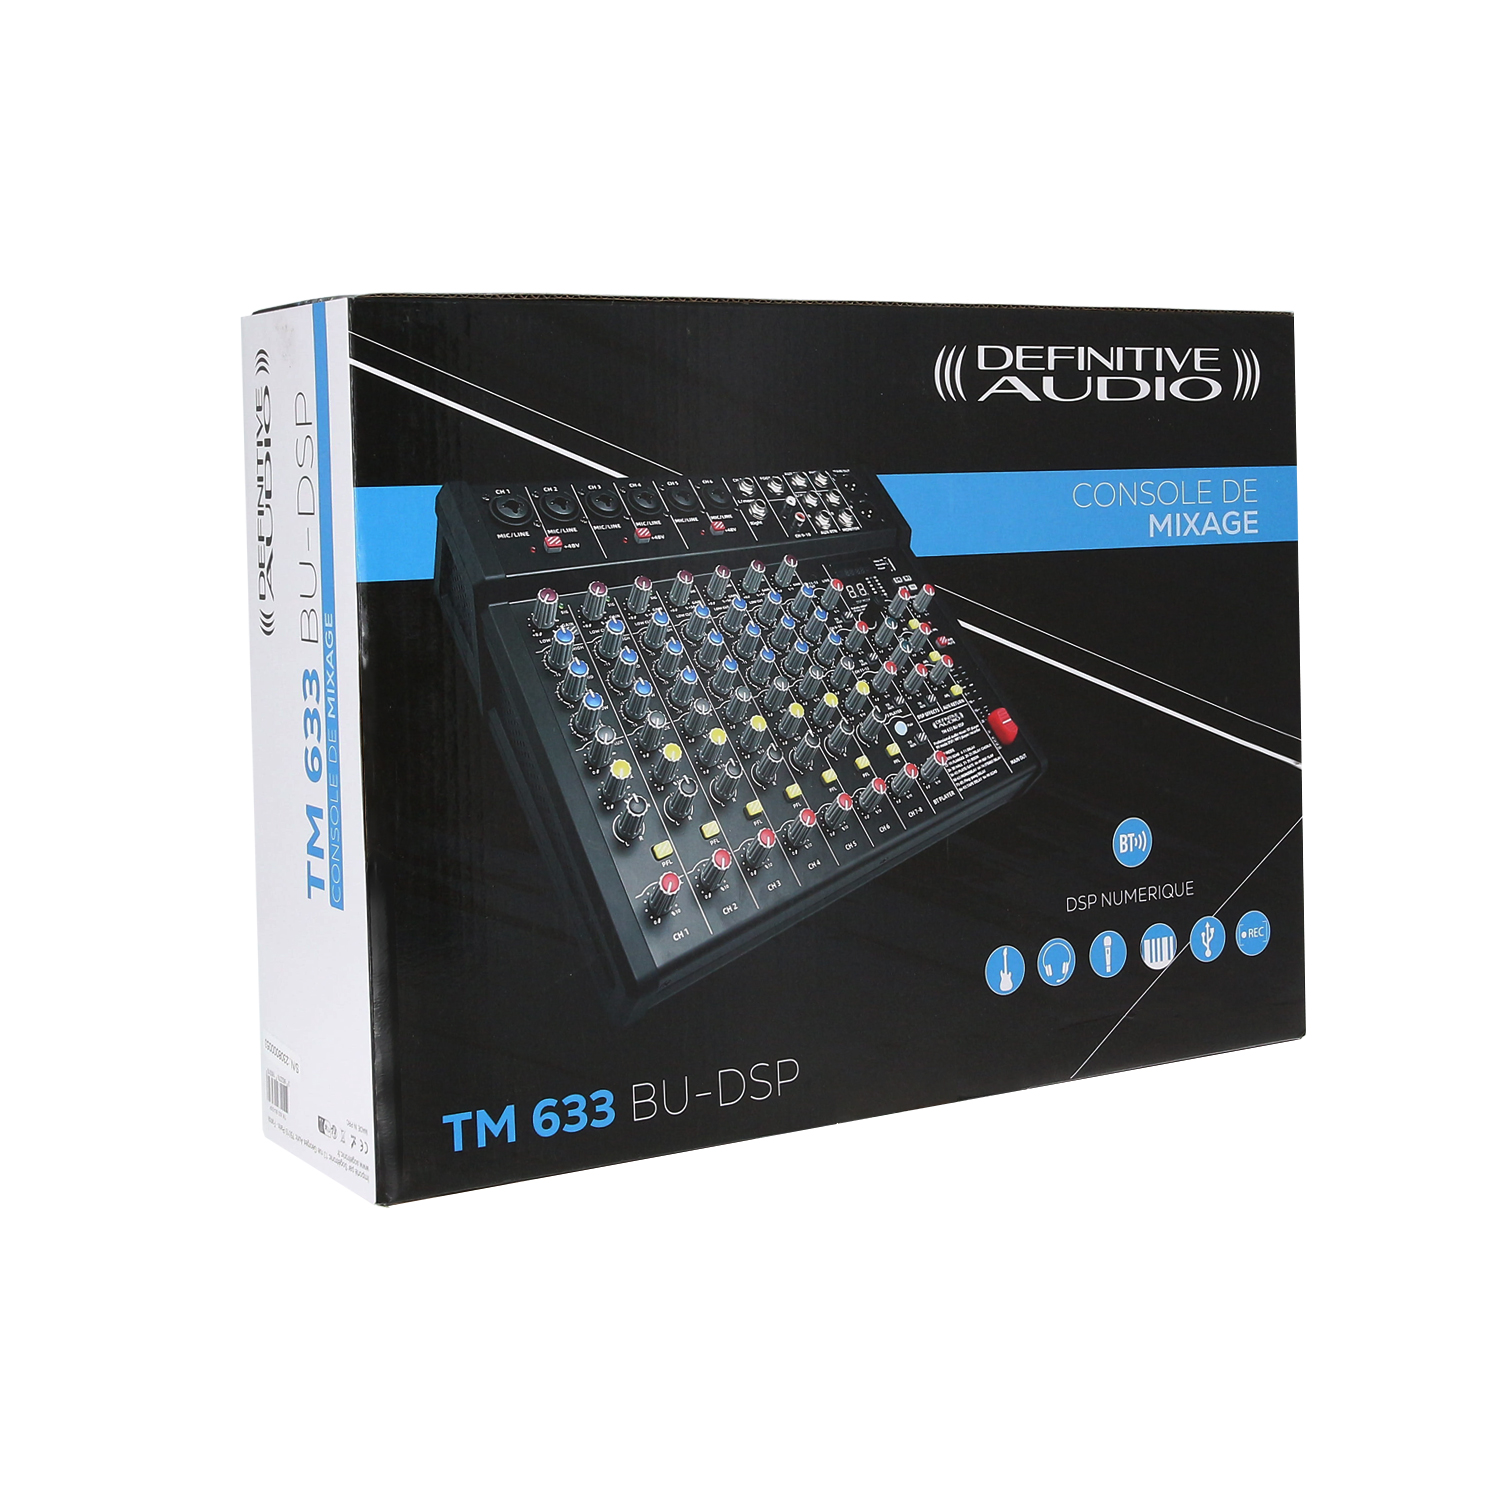 Definitive Audio Tm 633 Bu-dsp - Analog mixing desk - Variation 8